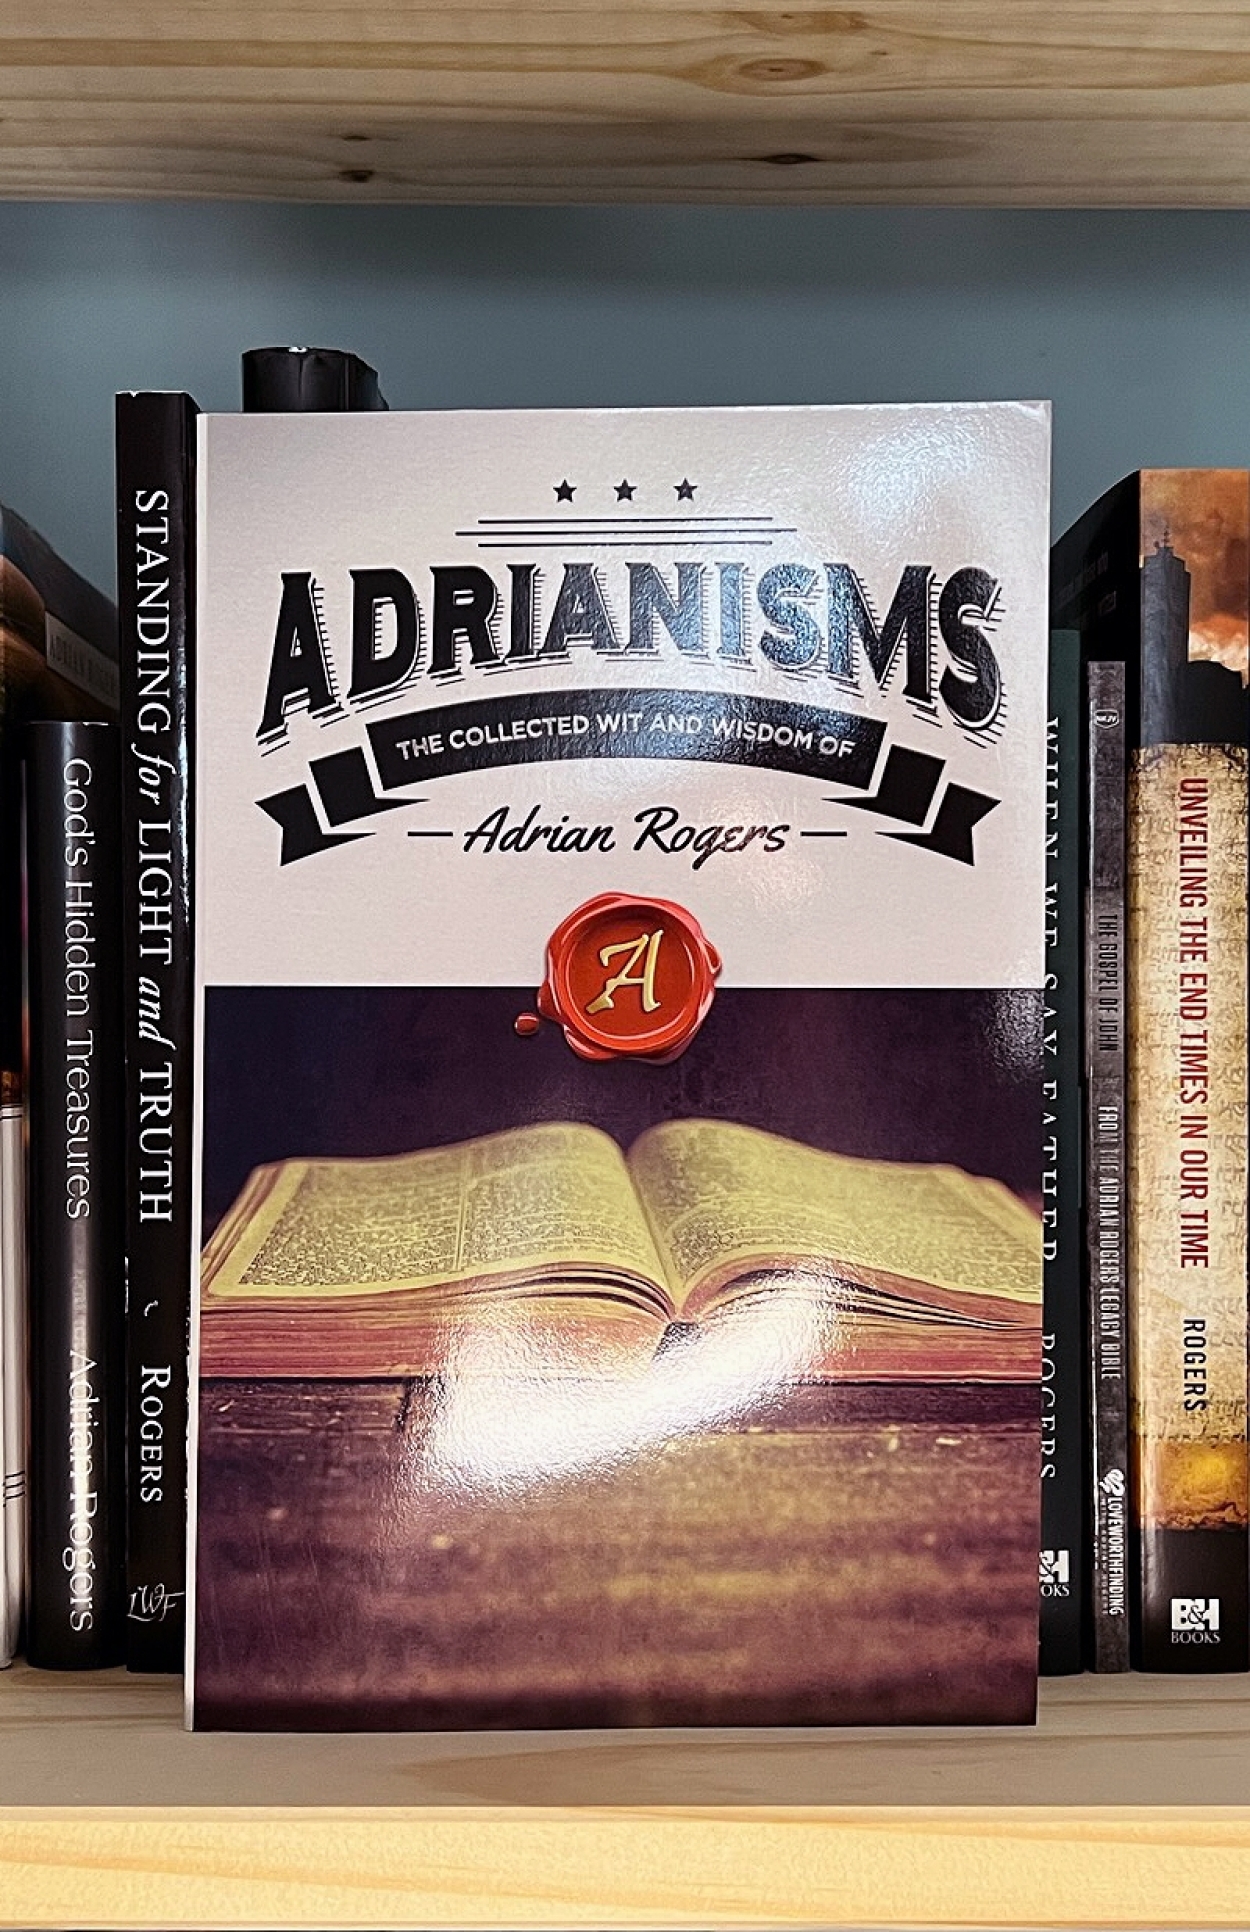 B126 adrianisms paperback BOOKSHELF